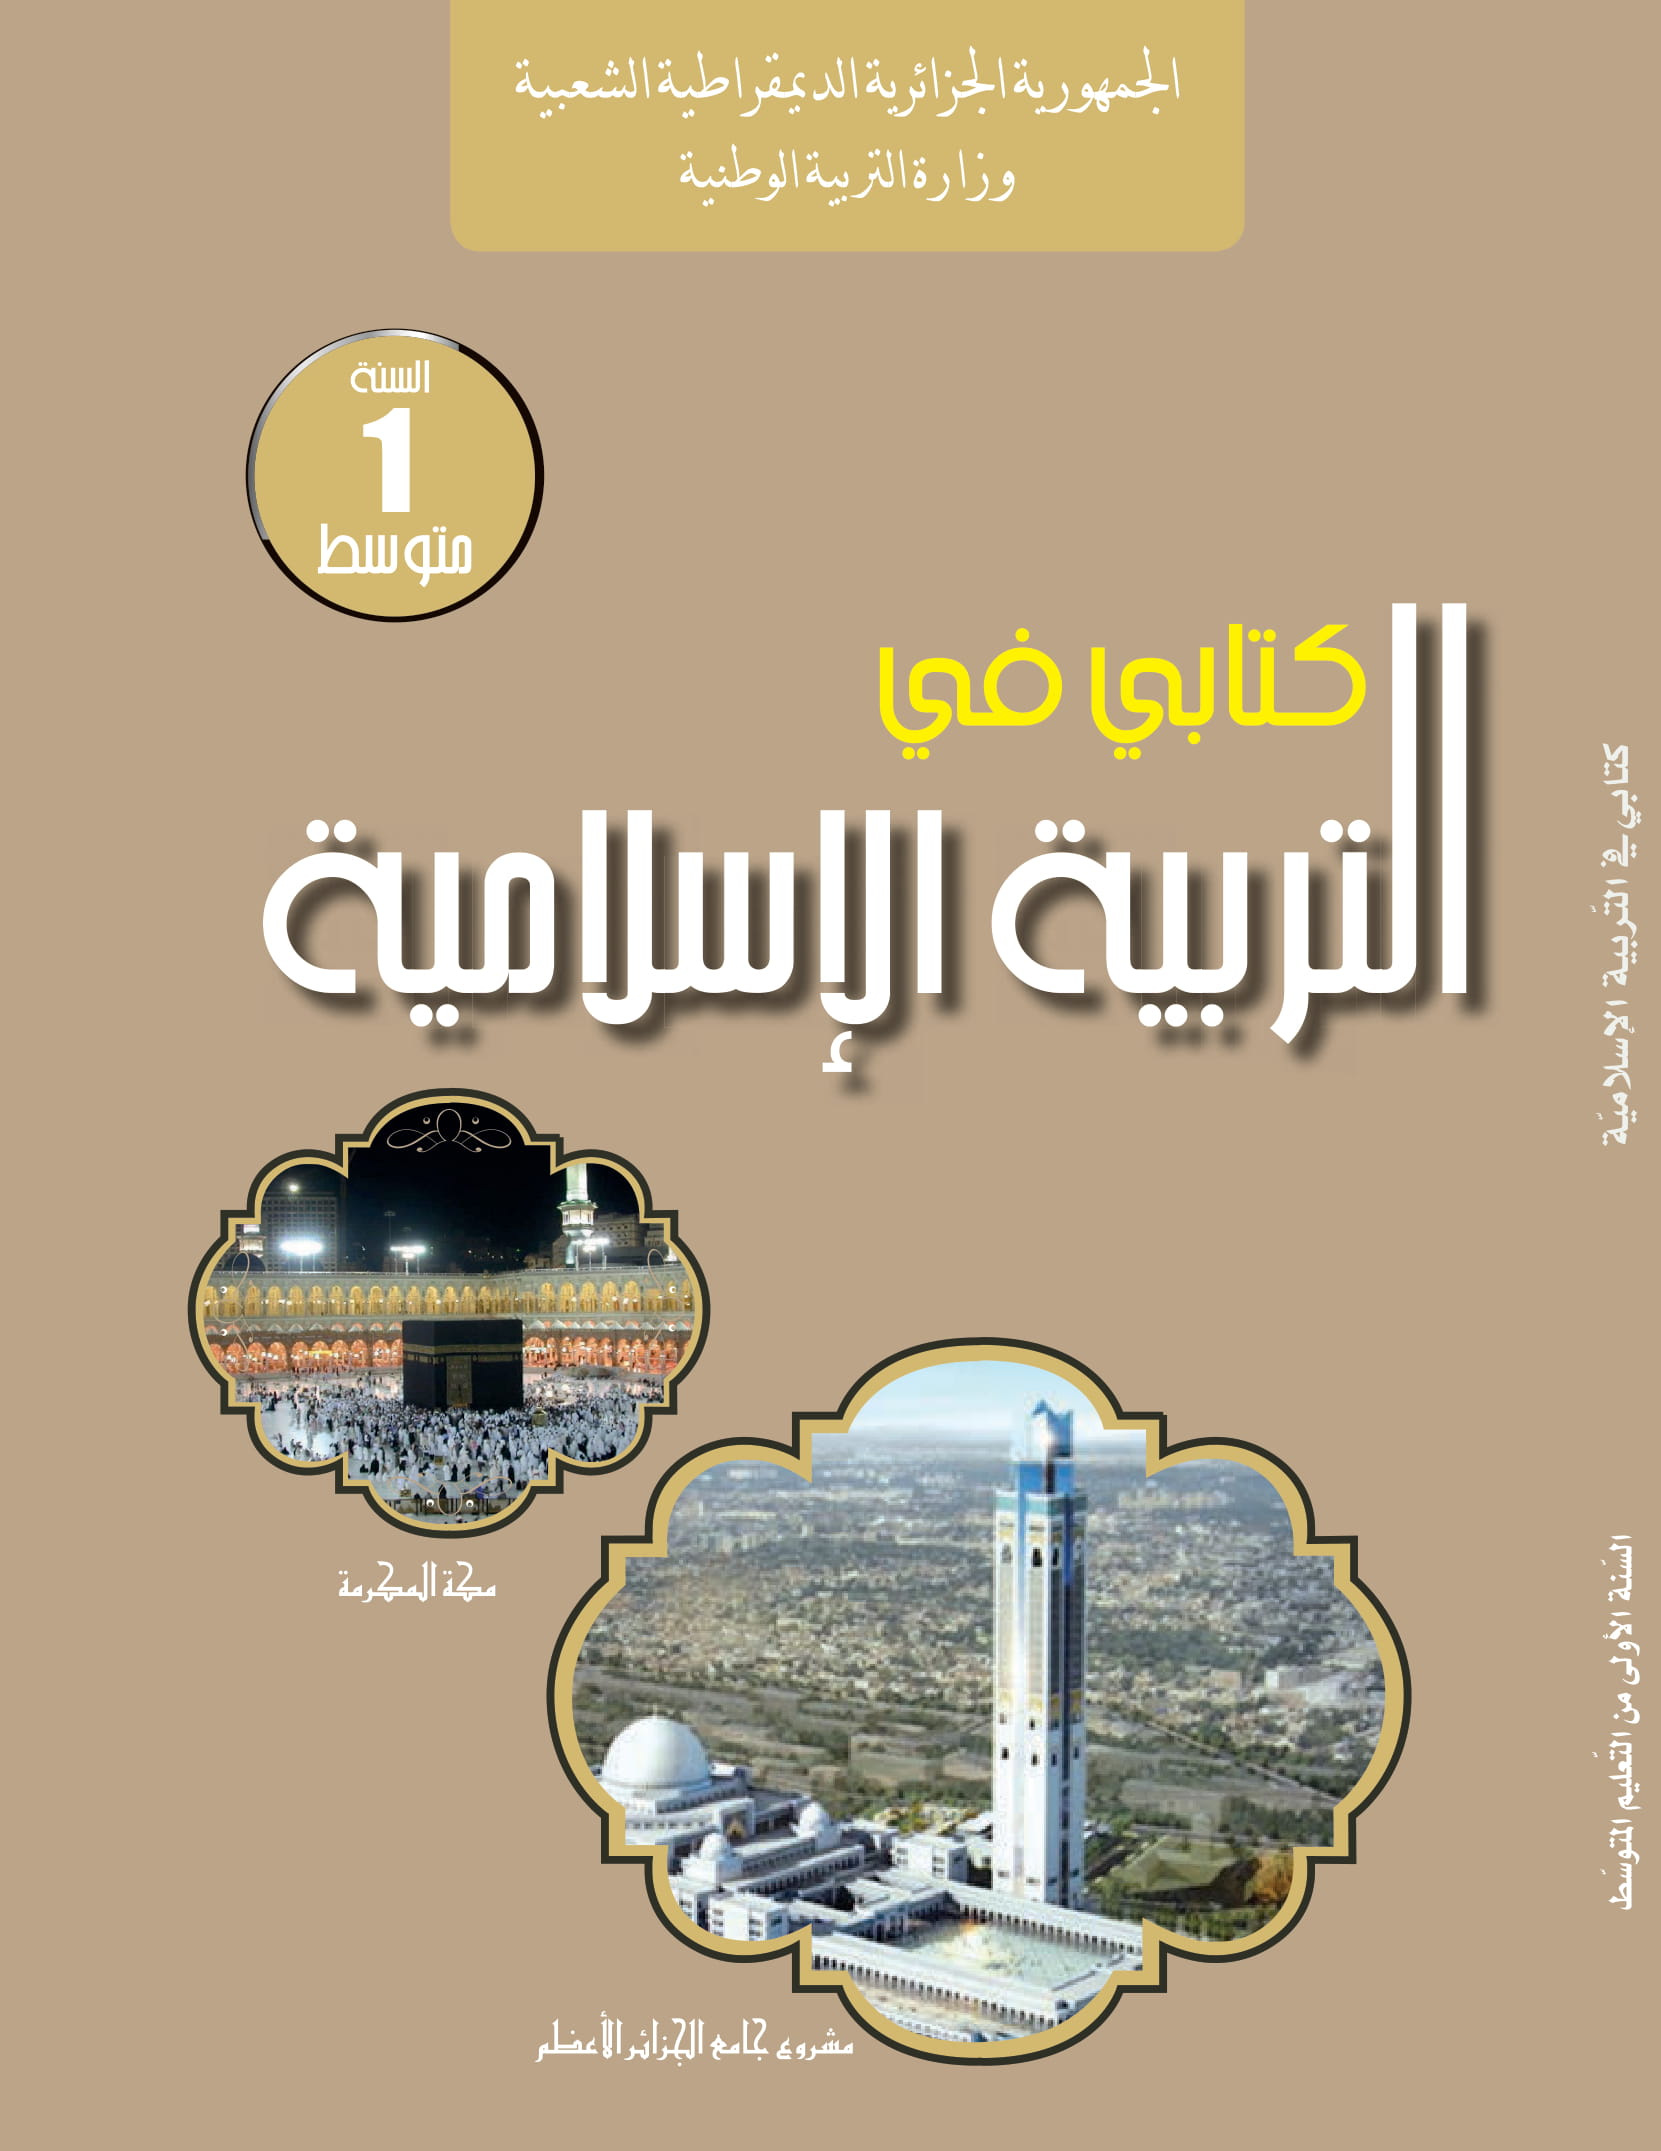 MS 703 Couverture islamique 1AM 1 - الديوان الوطني للمطبوعات المدرسية